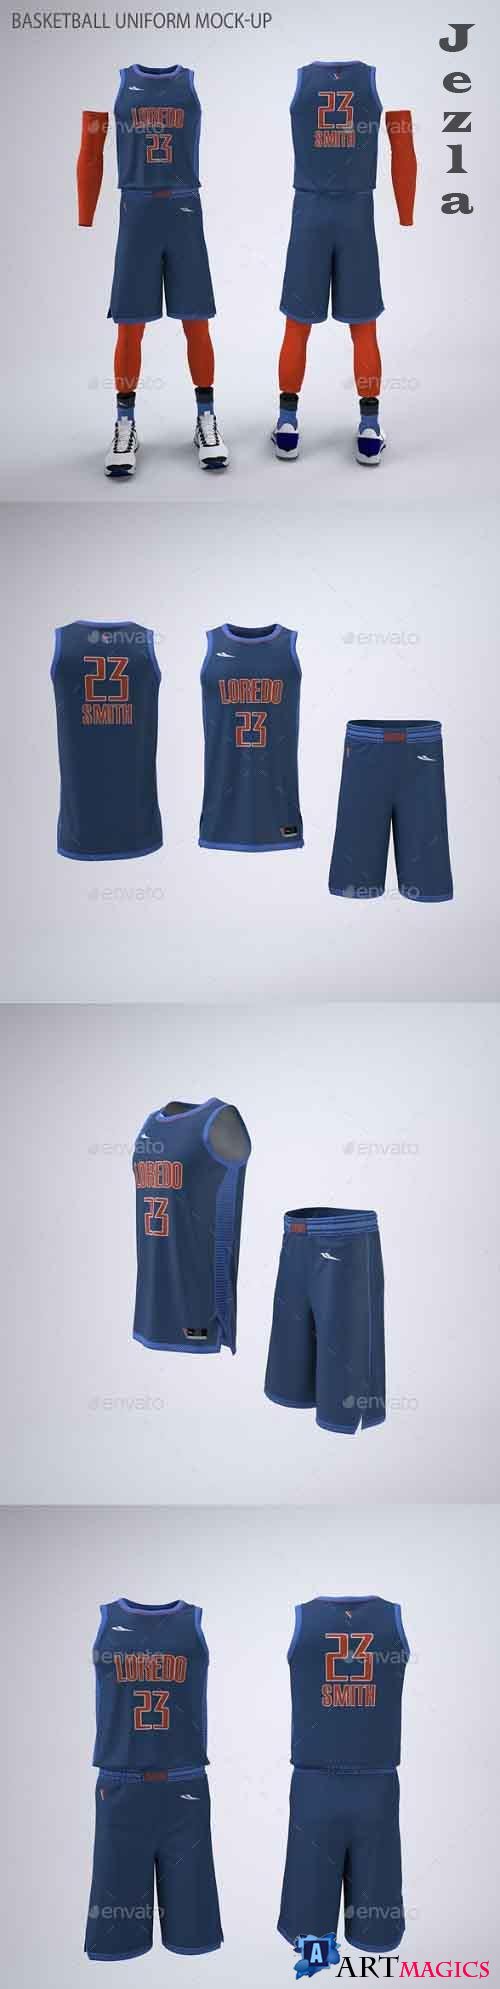 Basketball Jersey and Shorts Uniform Mock-Up 21586628